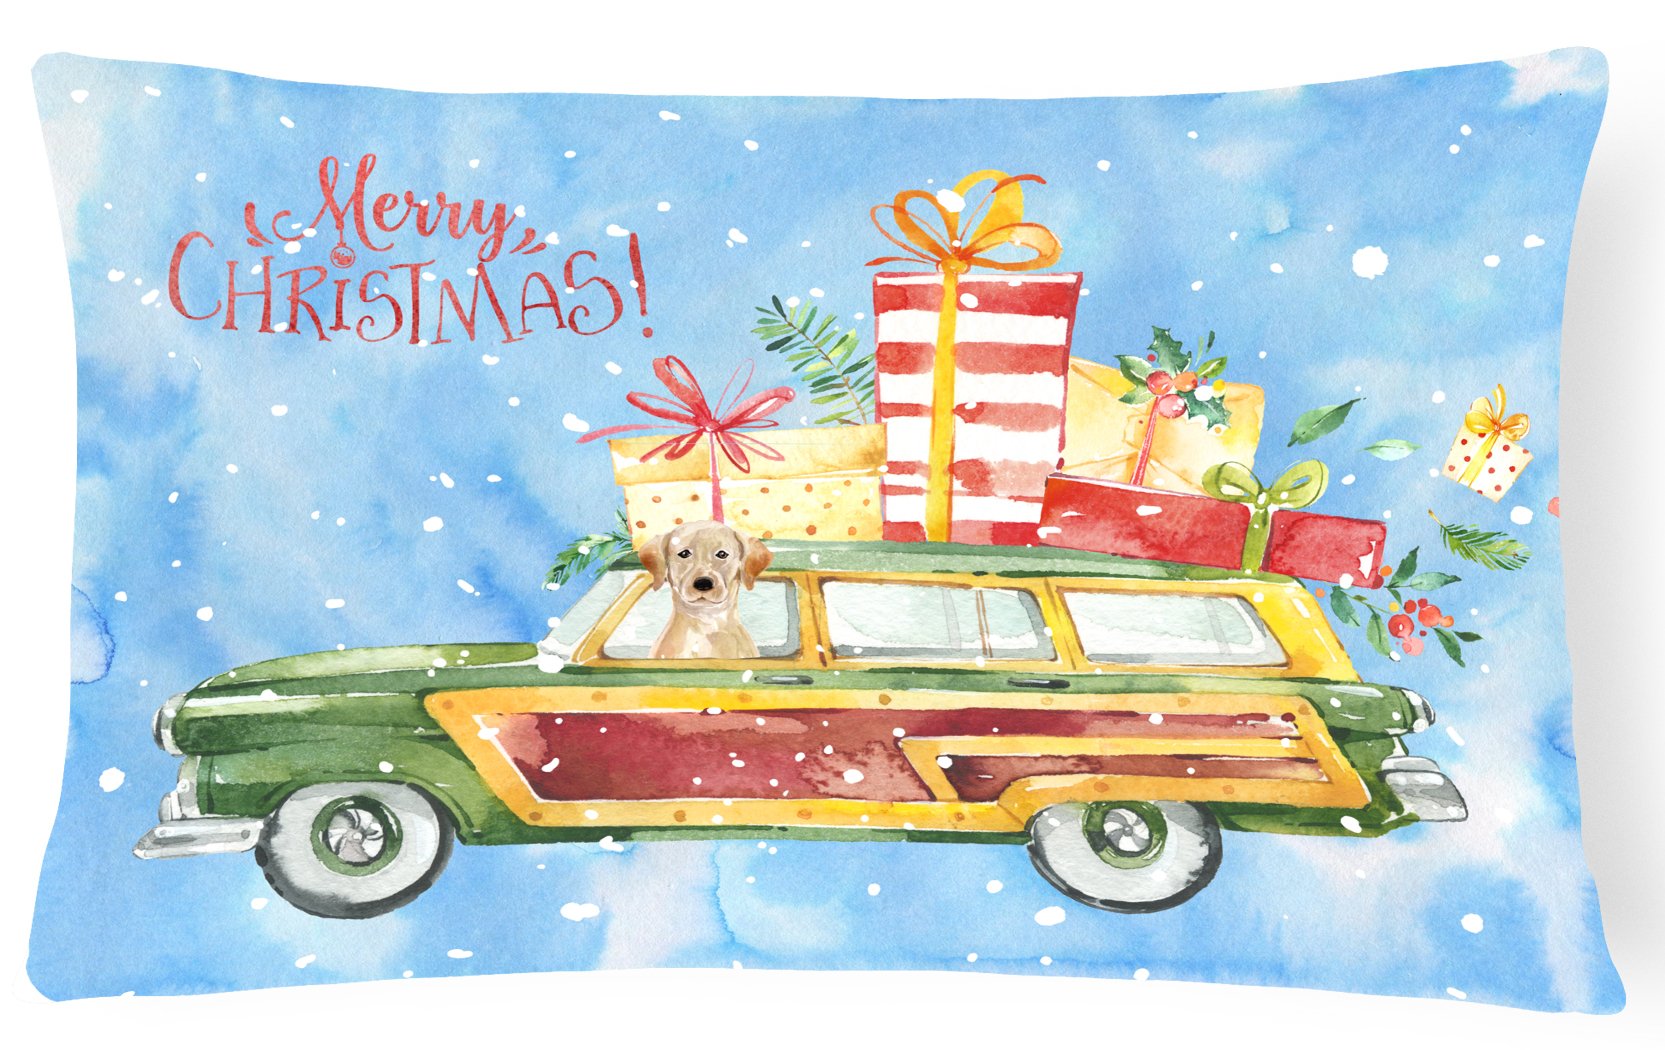 Merry Christmas Yellow Labrador Retriever Canvas Fabric Decorative Pillow CK2439PW1216 by Caroline's Treasures